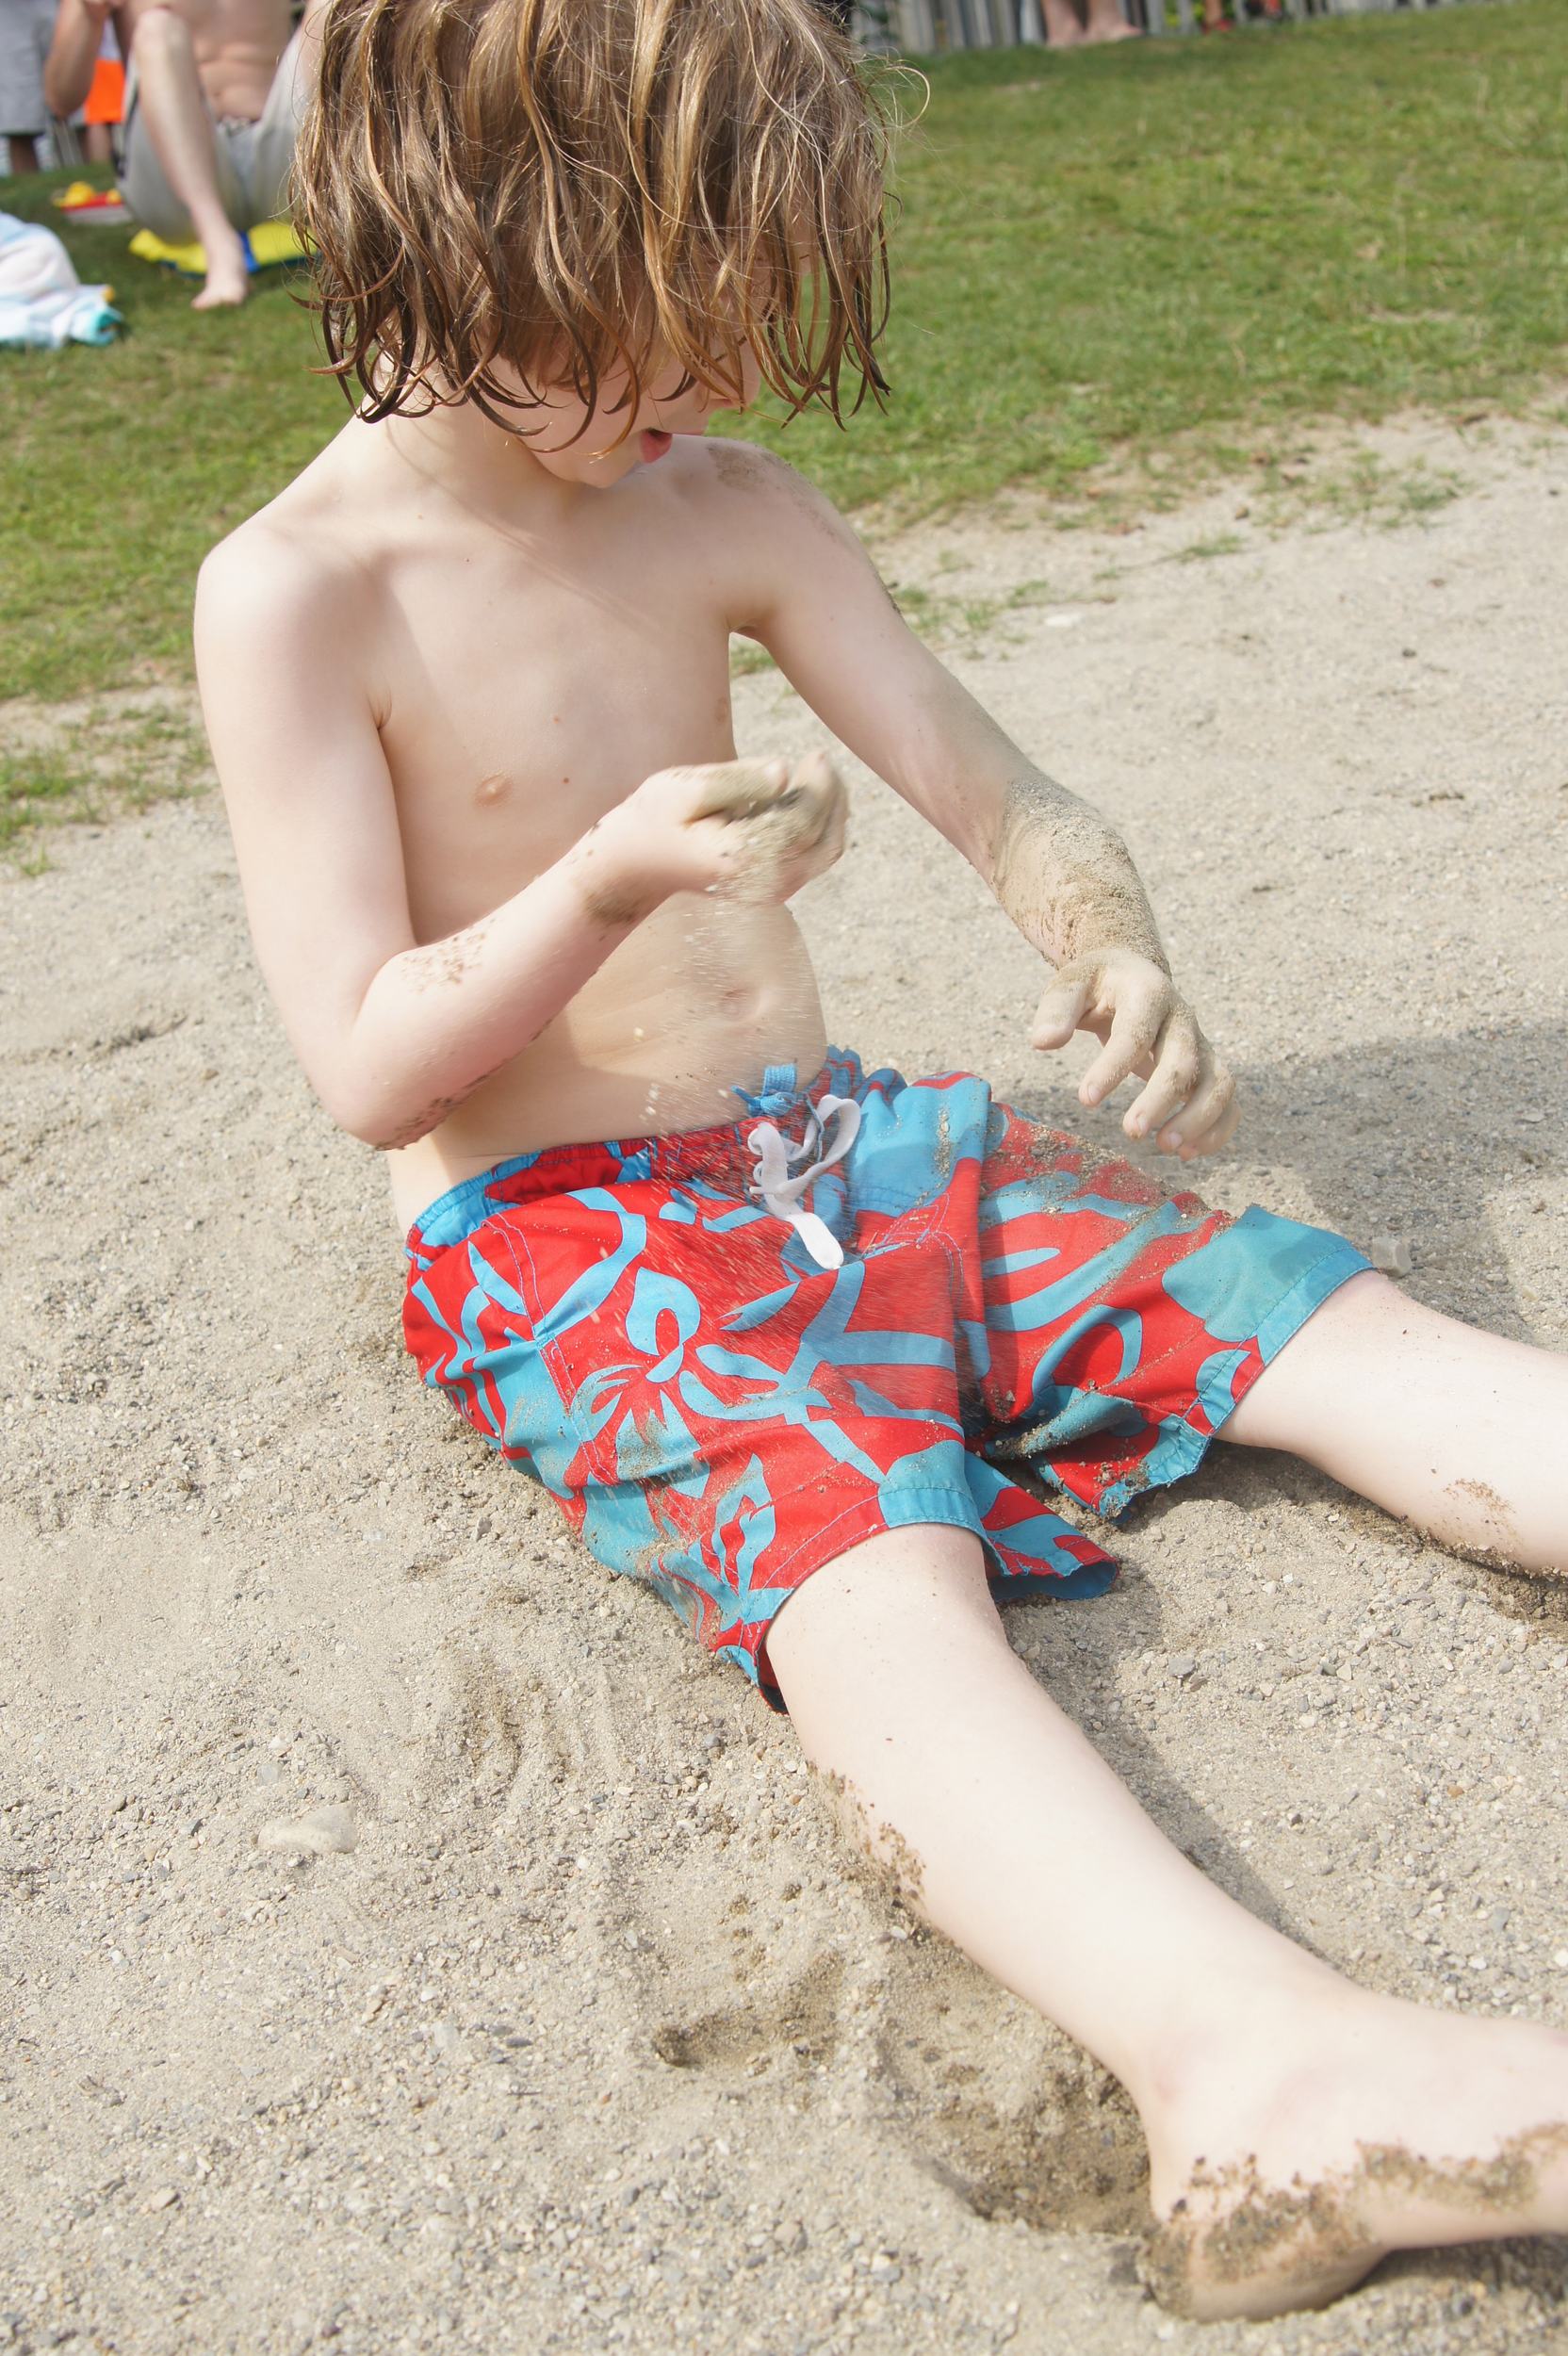 Turning himself into a sand golem.